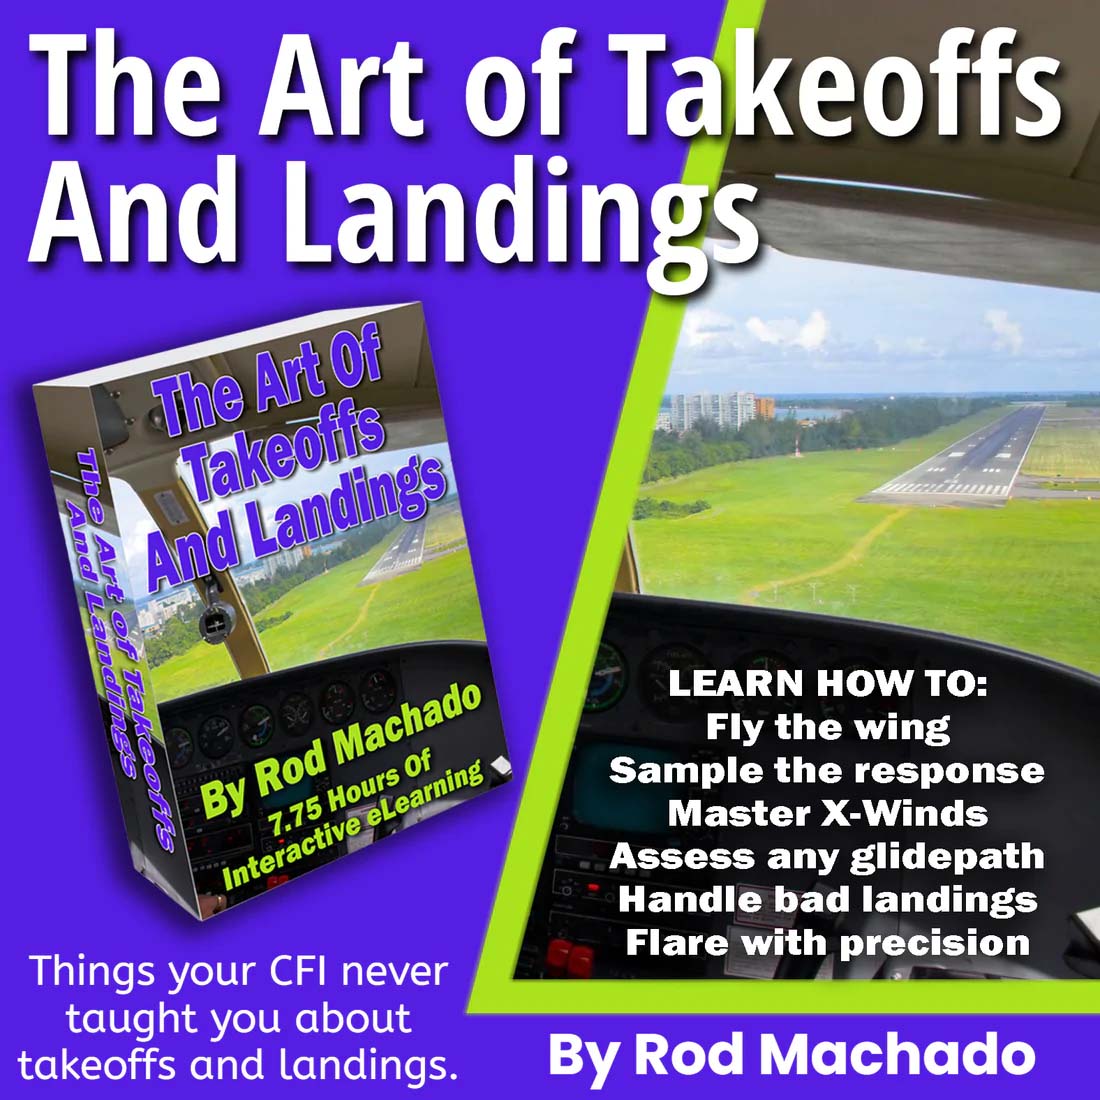 Rod Machado Flight Instruction Video and Courses